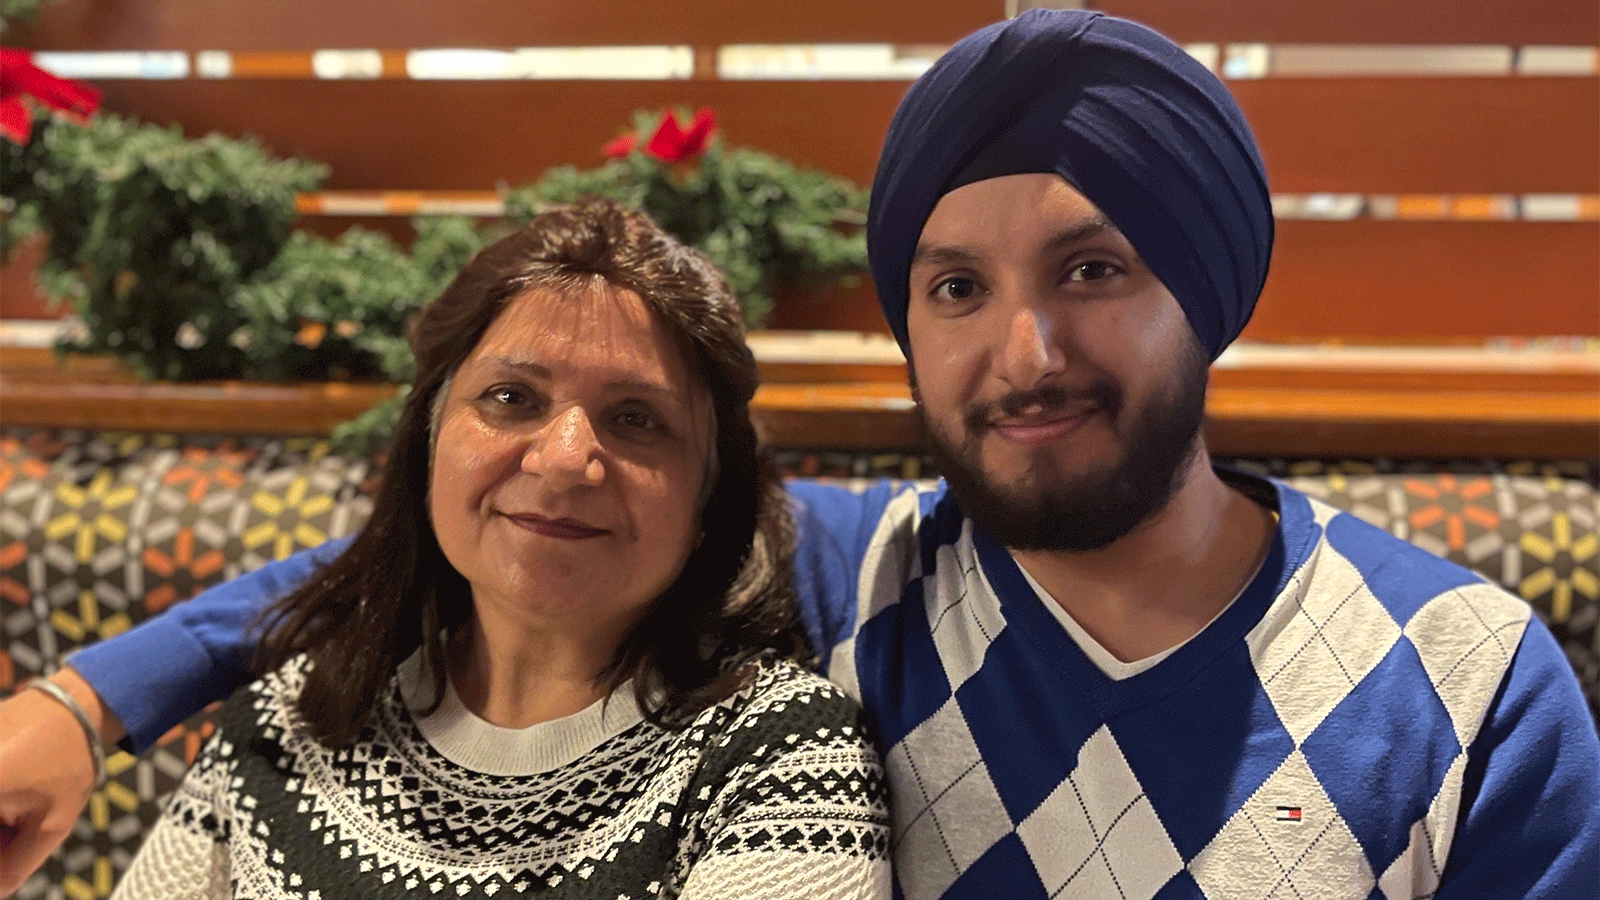  Urdeep Arora dedicates generous gift to his mother’s recovery